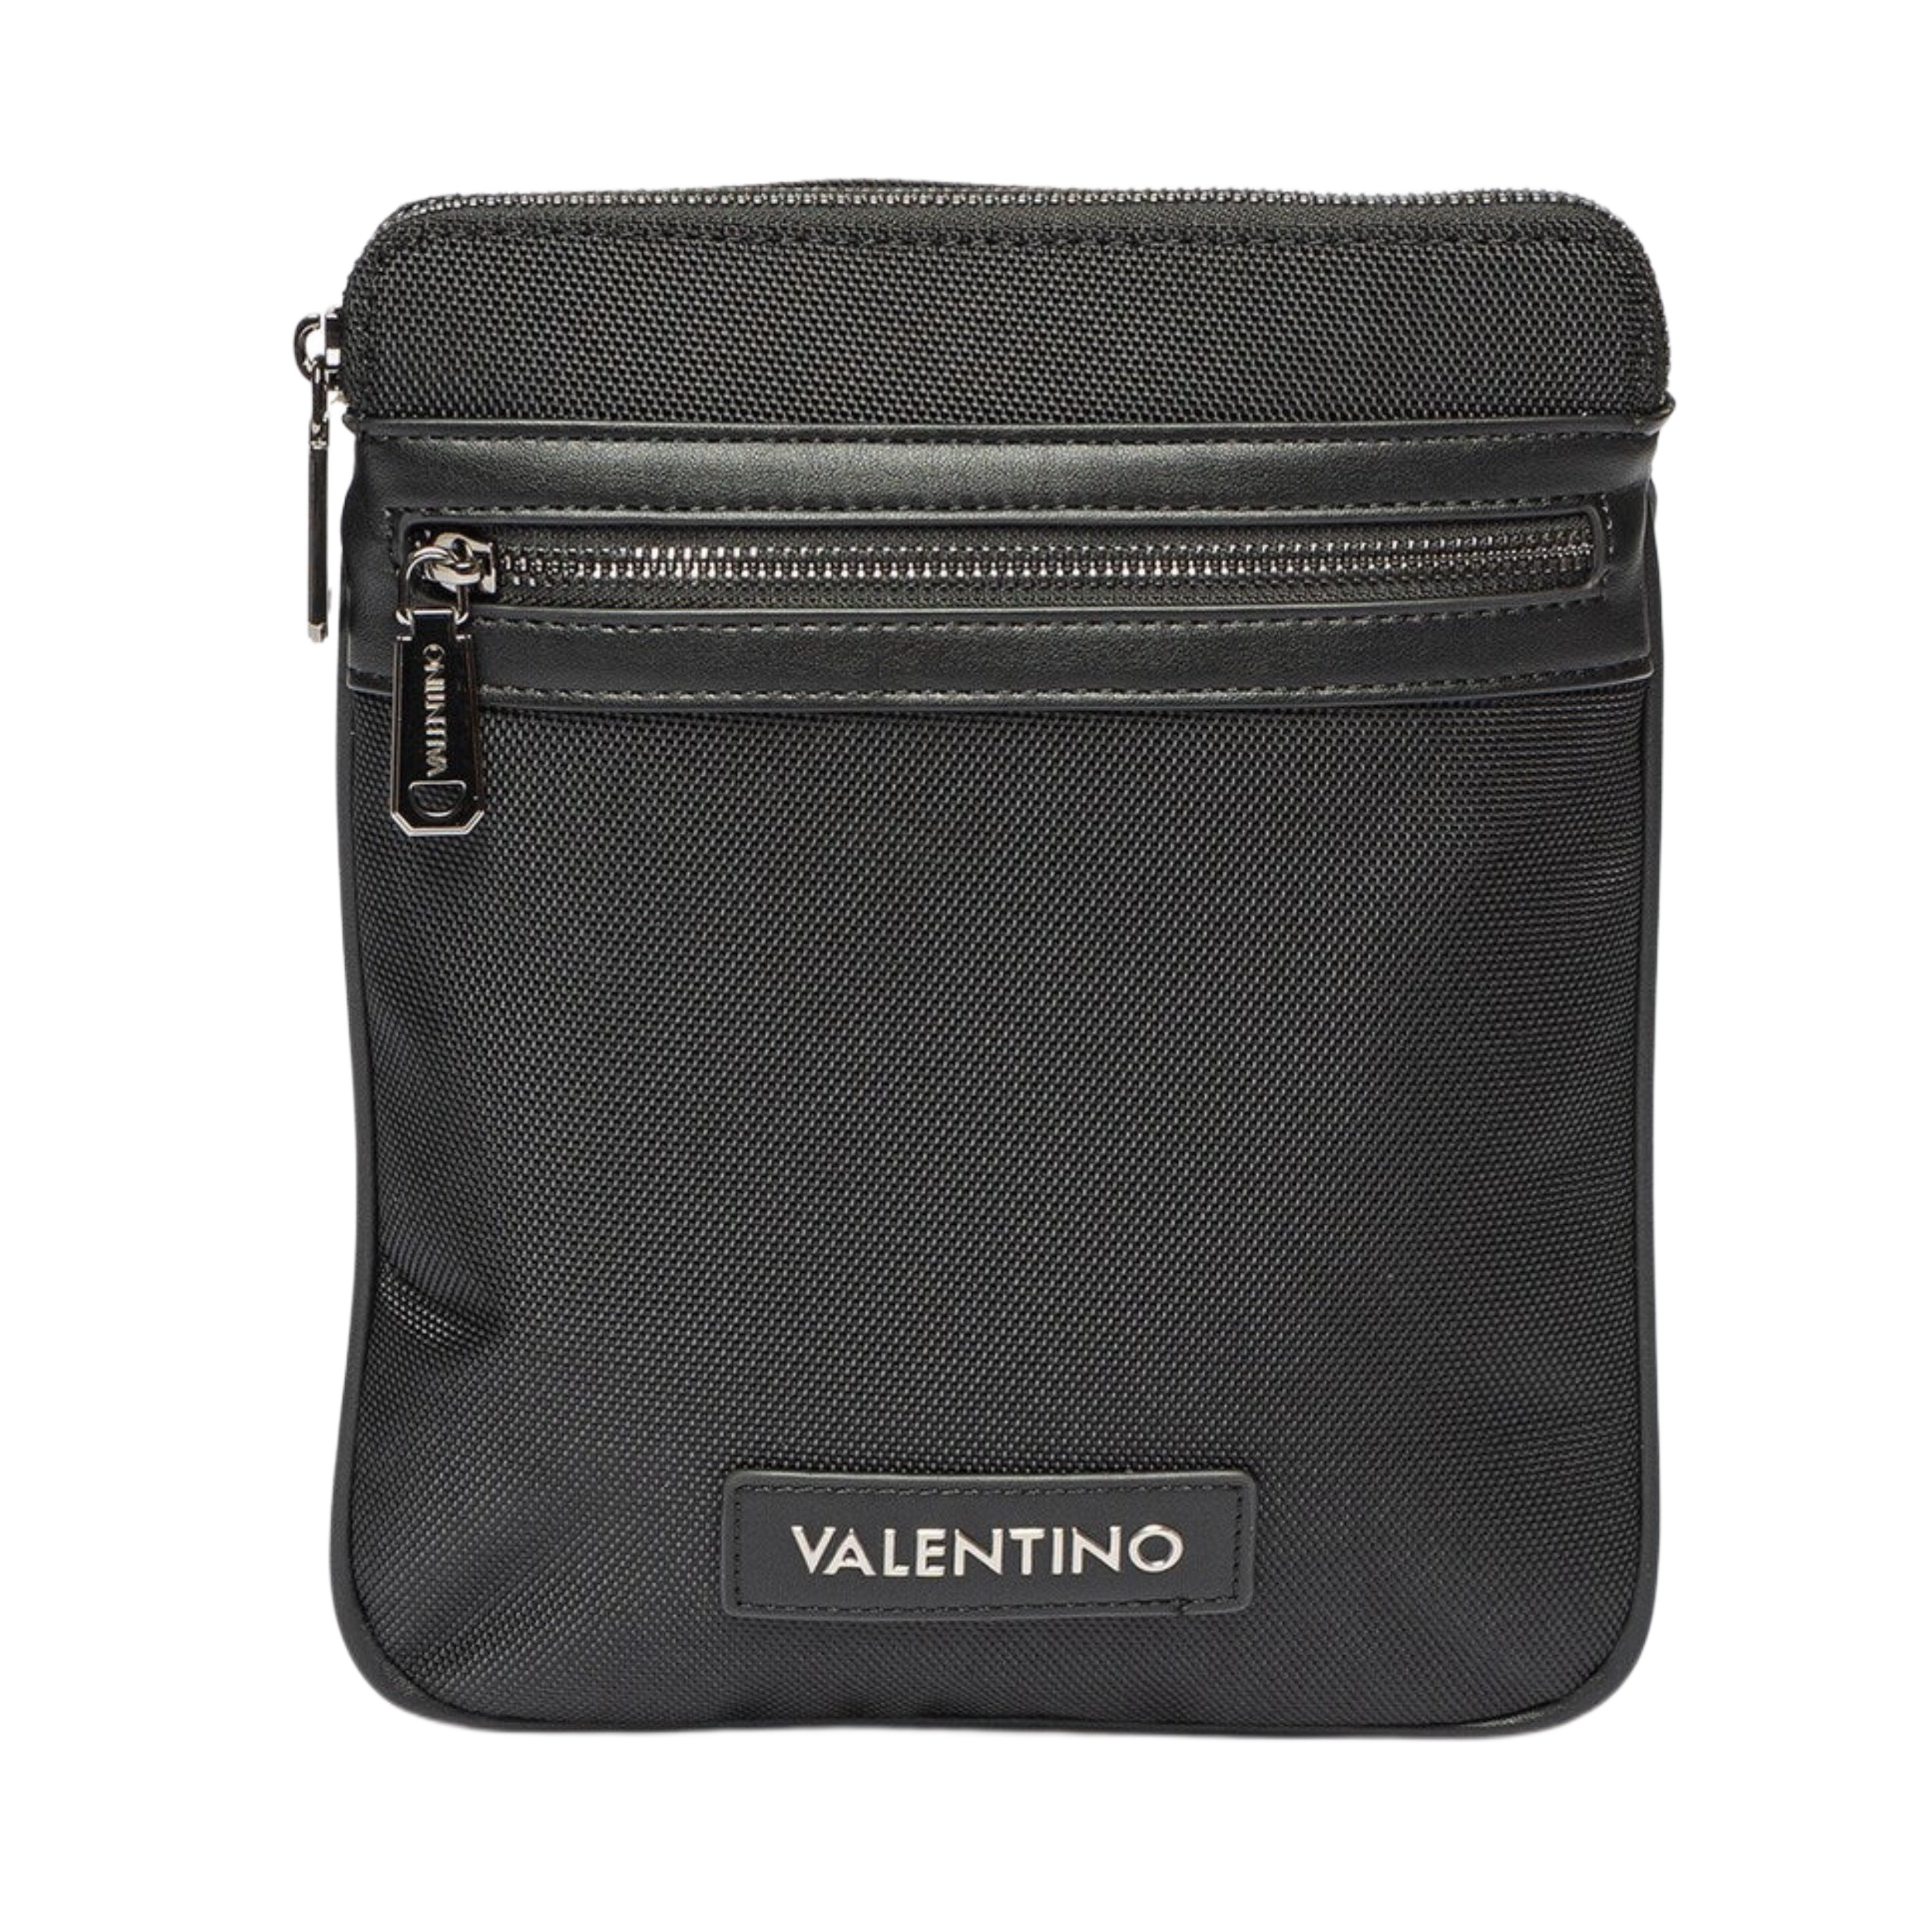 Valentino crossbody bag